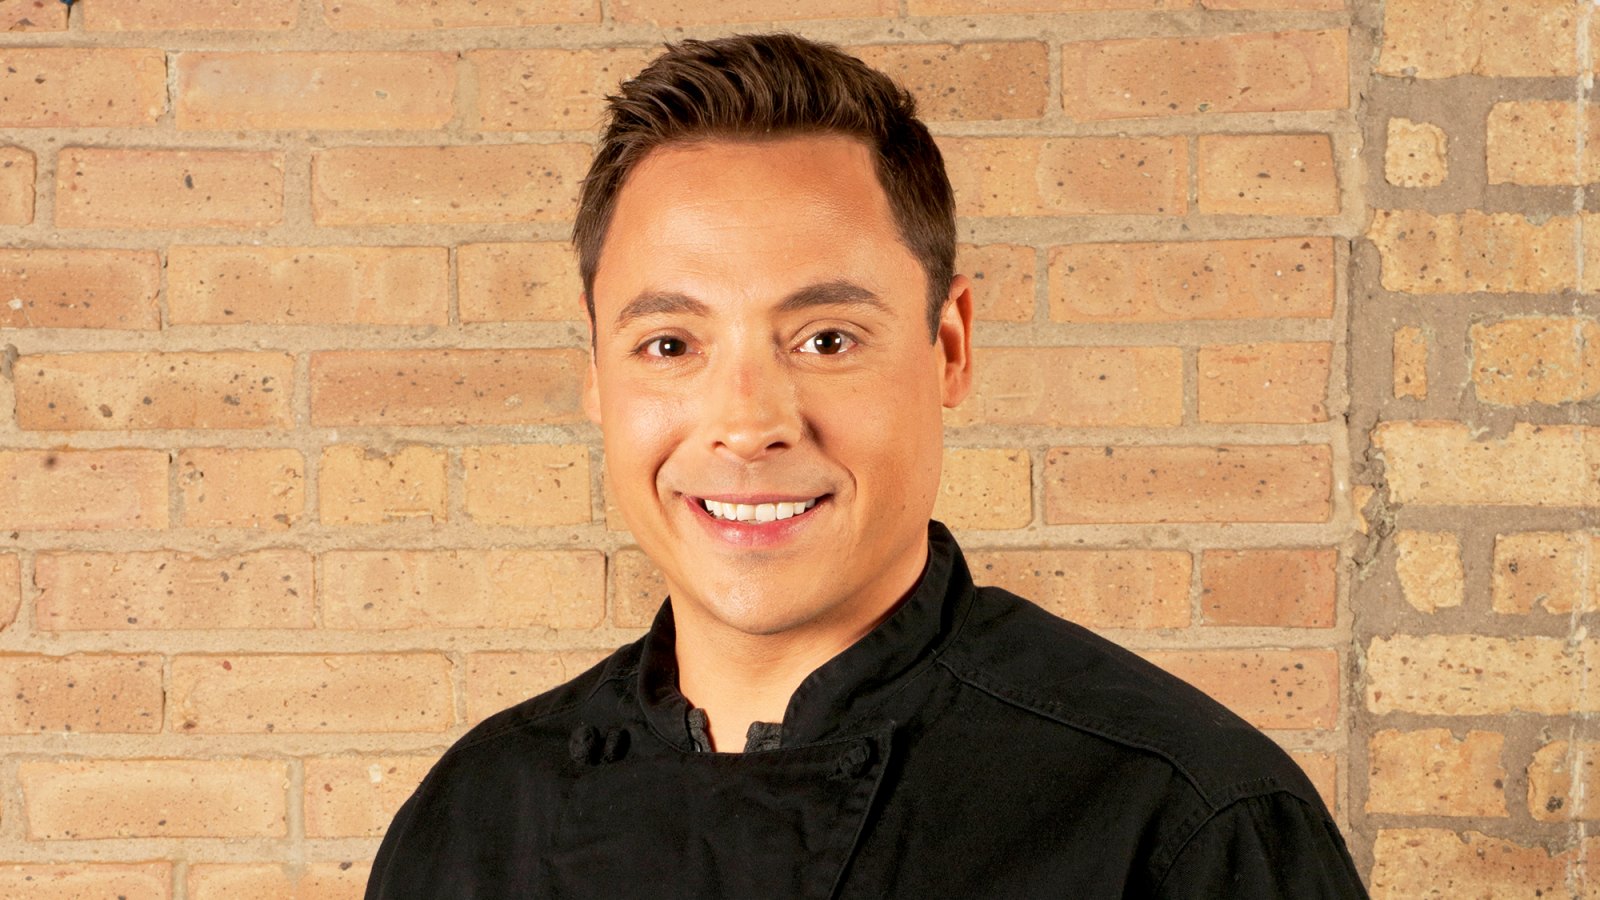 Chef Jeff Mauro